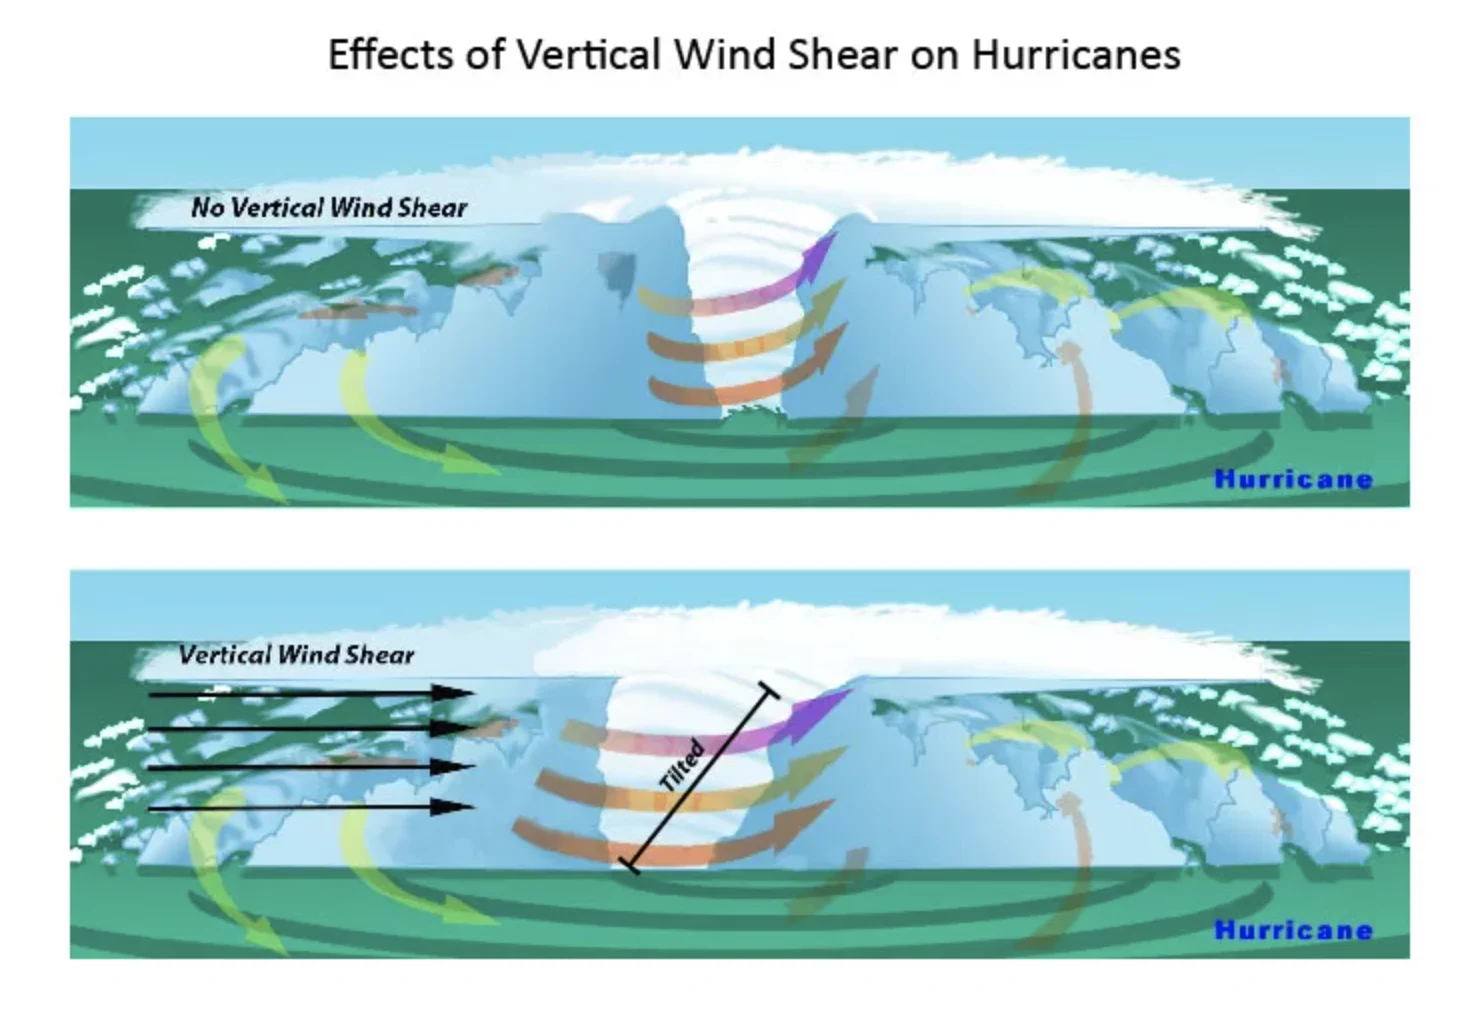 NOAA: Wind shear explainer, hurricanes. Link: https://www.nesdis.noaa.gov/news/we-may-be-past-the-peak-hurricane-season-far-over